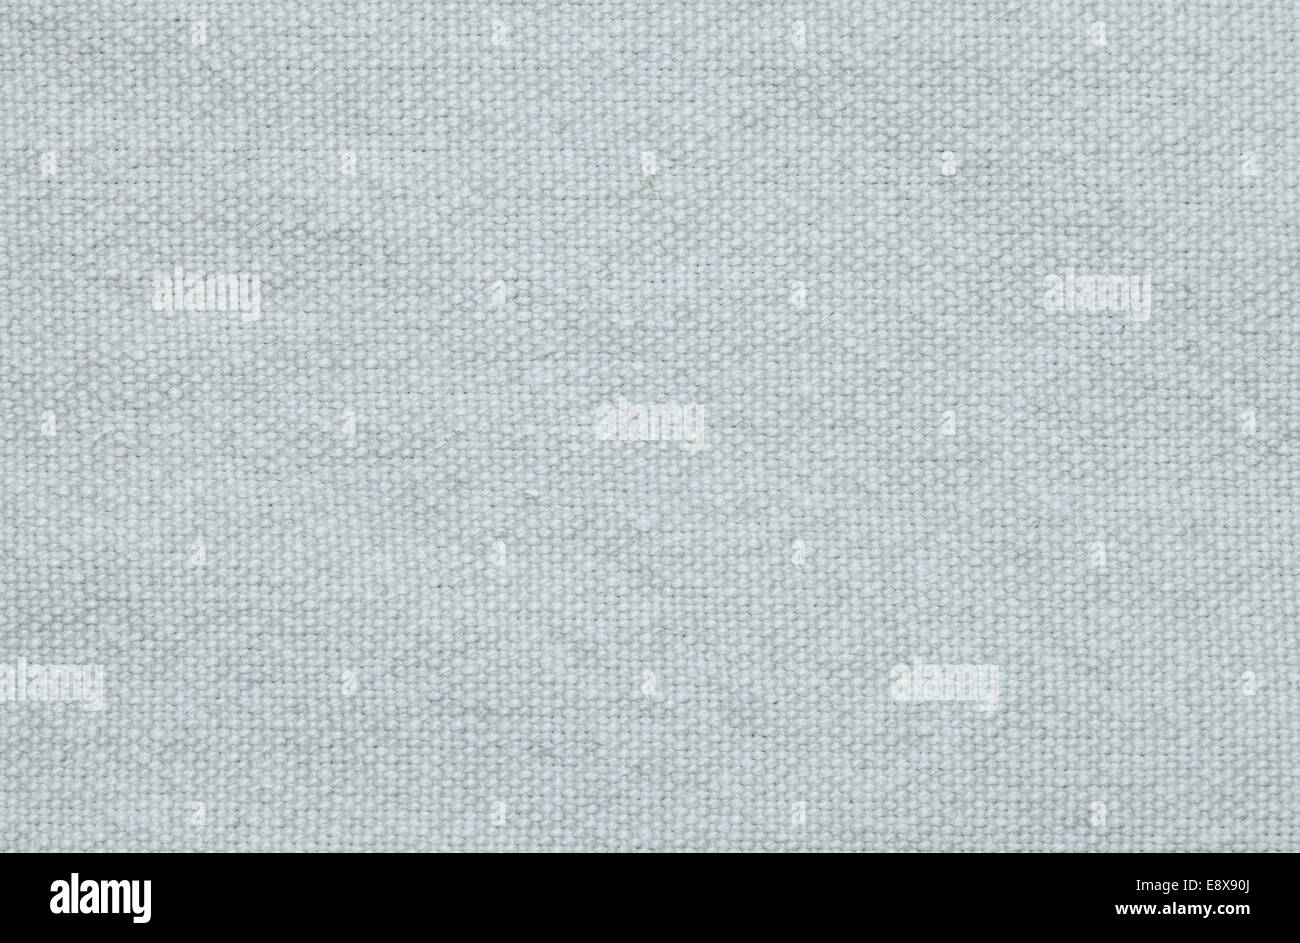 Pure hemp fabric background Stock Photo - Alamy